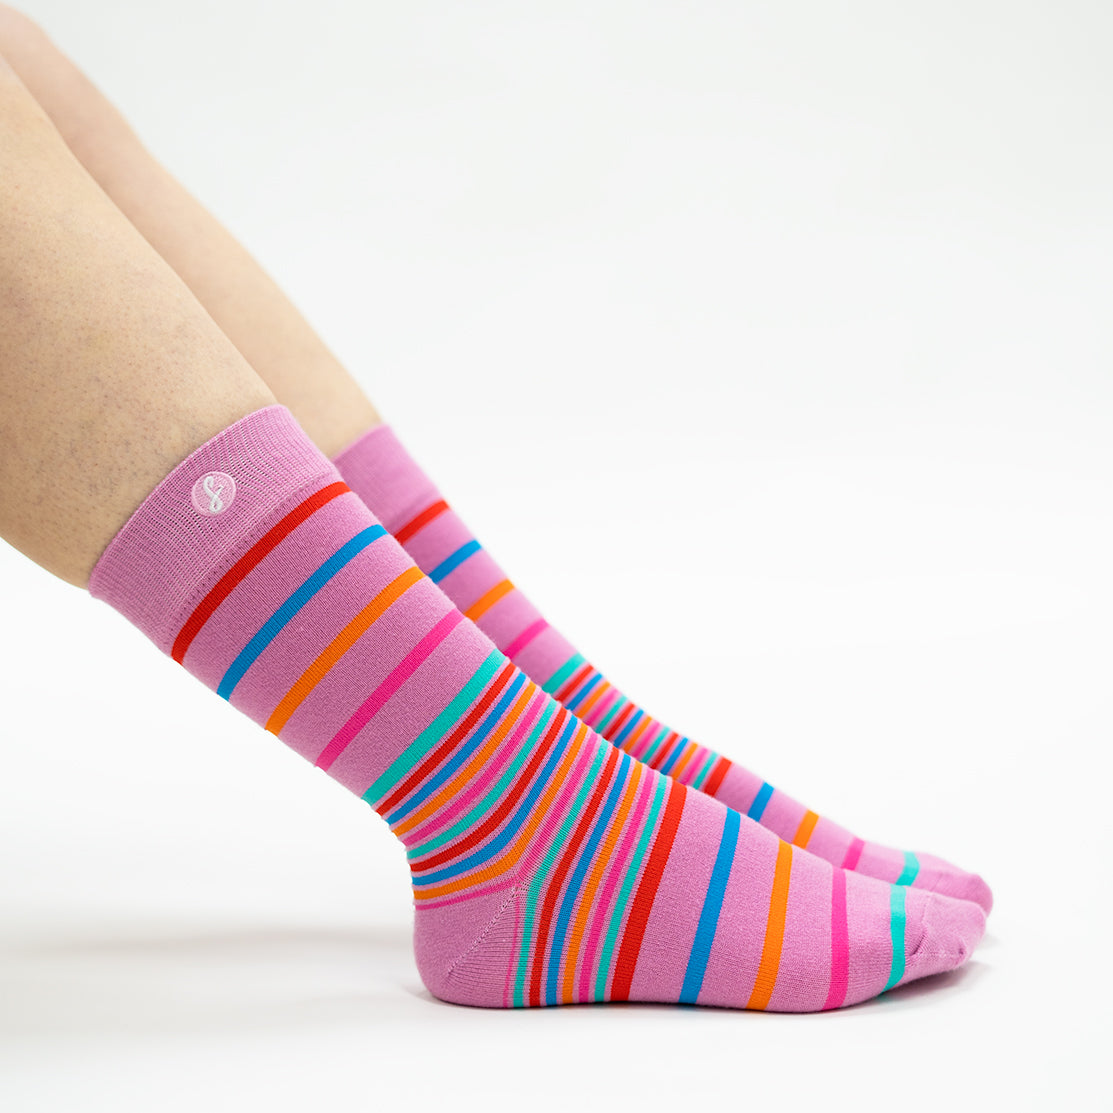 Colourful Stripe Cosmopolitan Merino Wool Socks